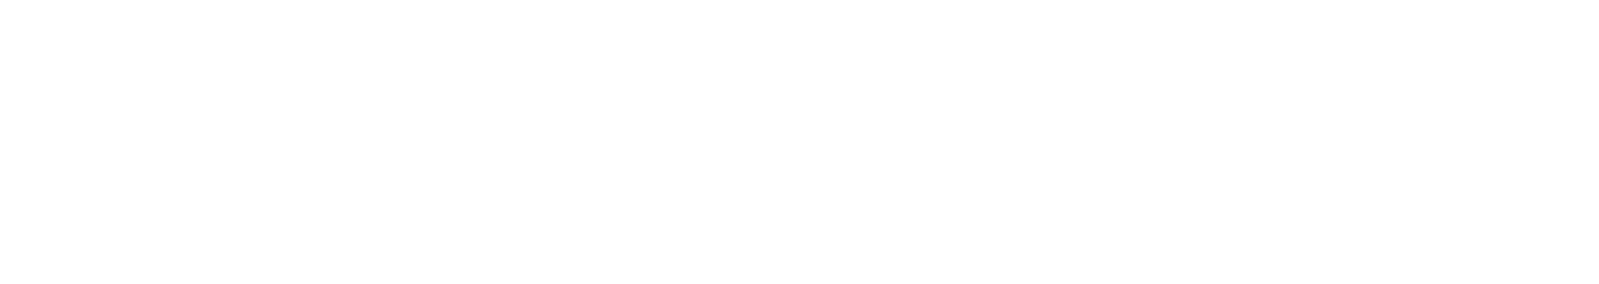 Kerry Logistics Network logo large for dark backgrounds (transparent PNG)